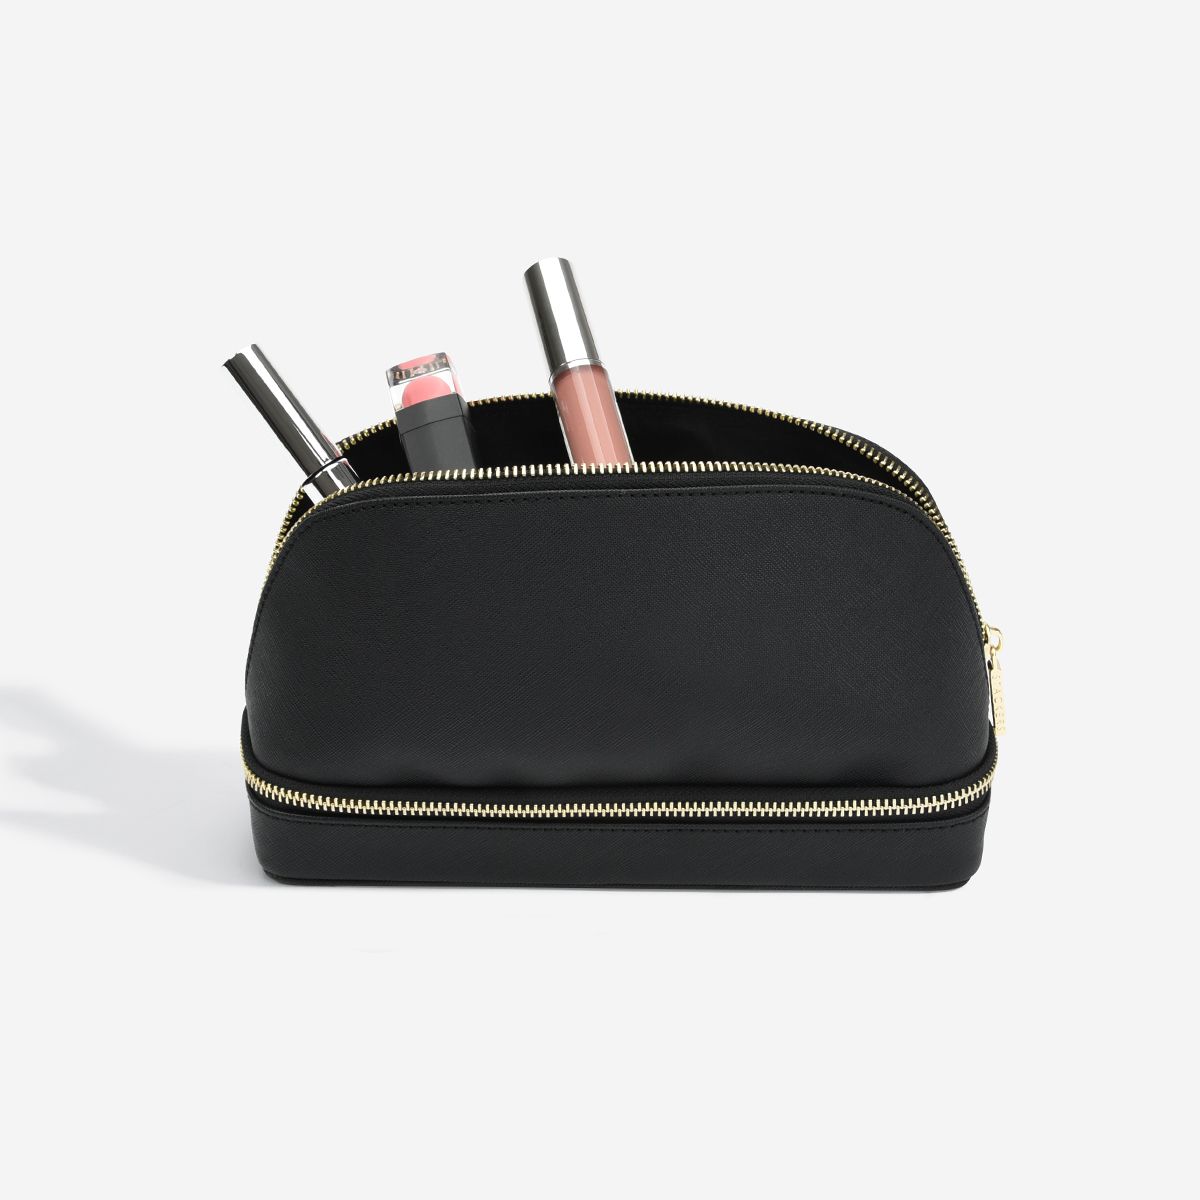 Zipped Make-Up Bag - Black